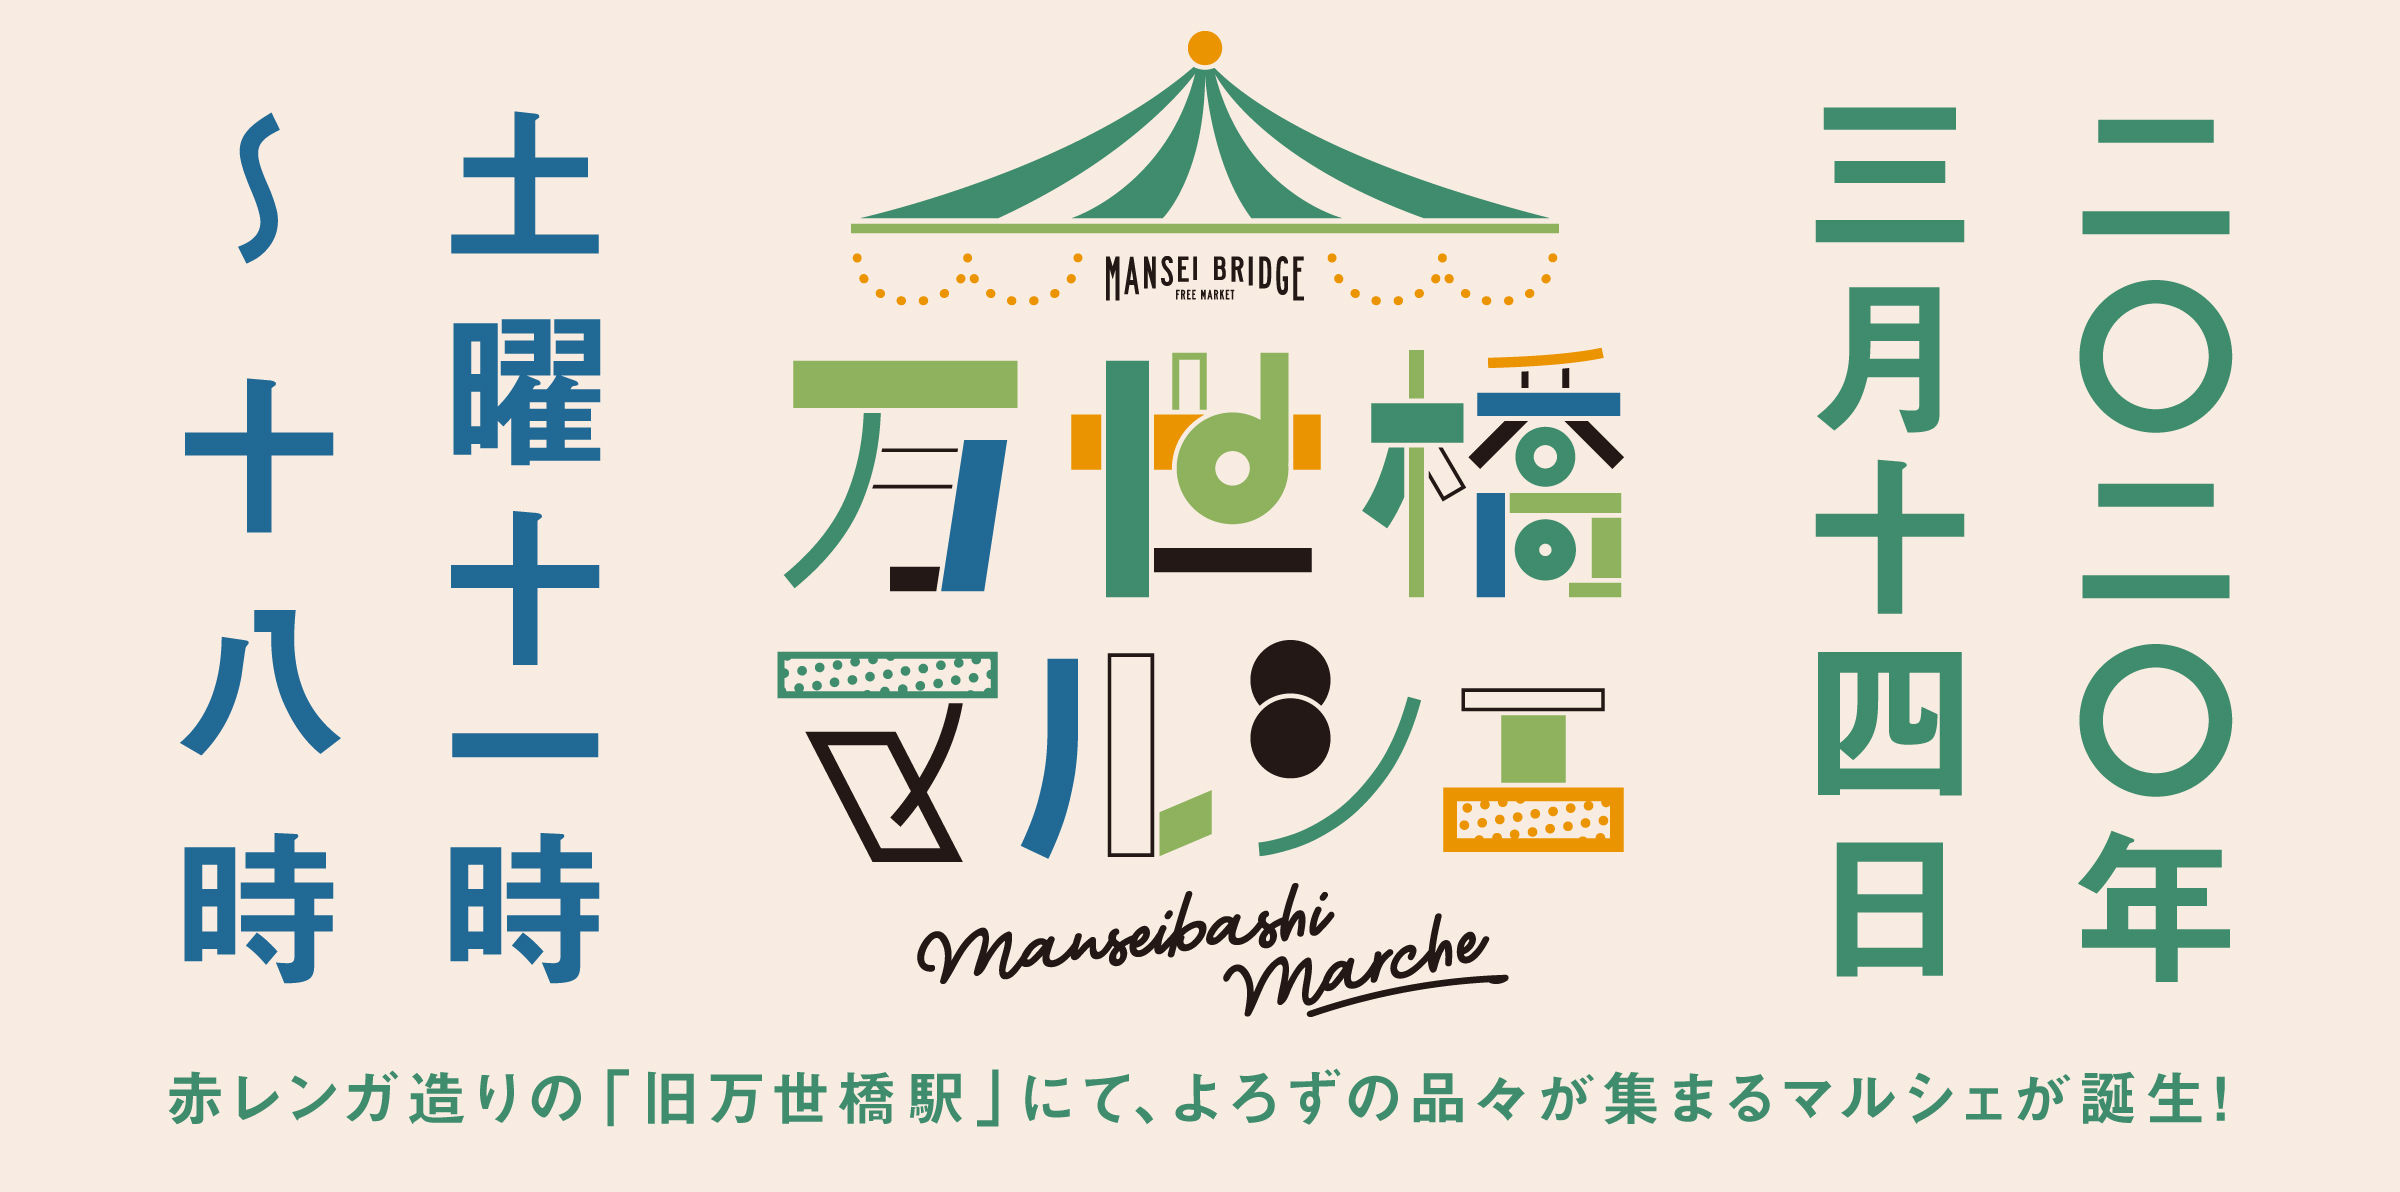 Manseibashi marche consumer hp 2020 3